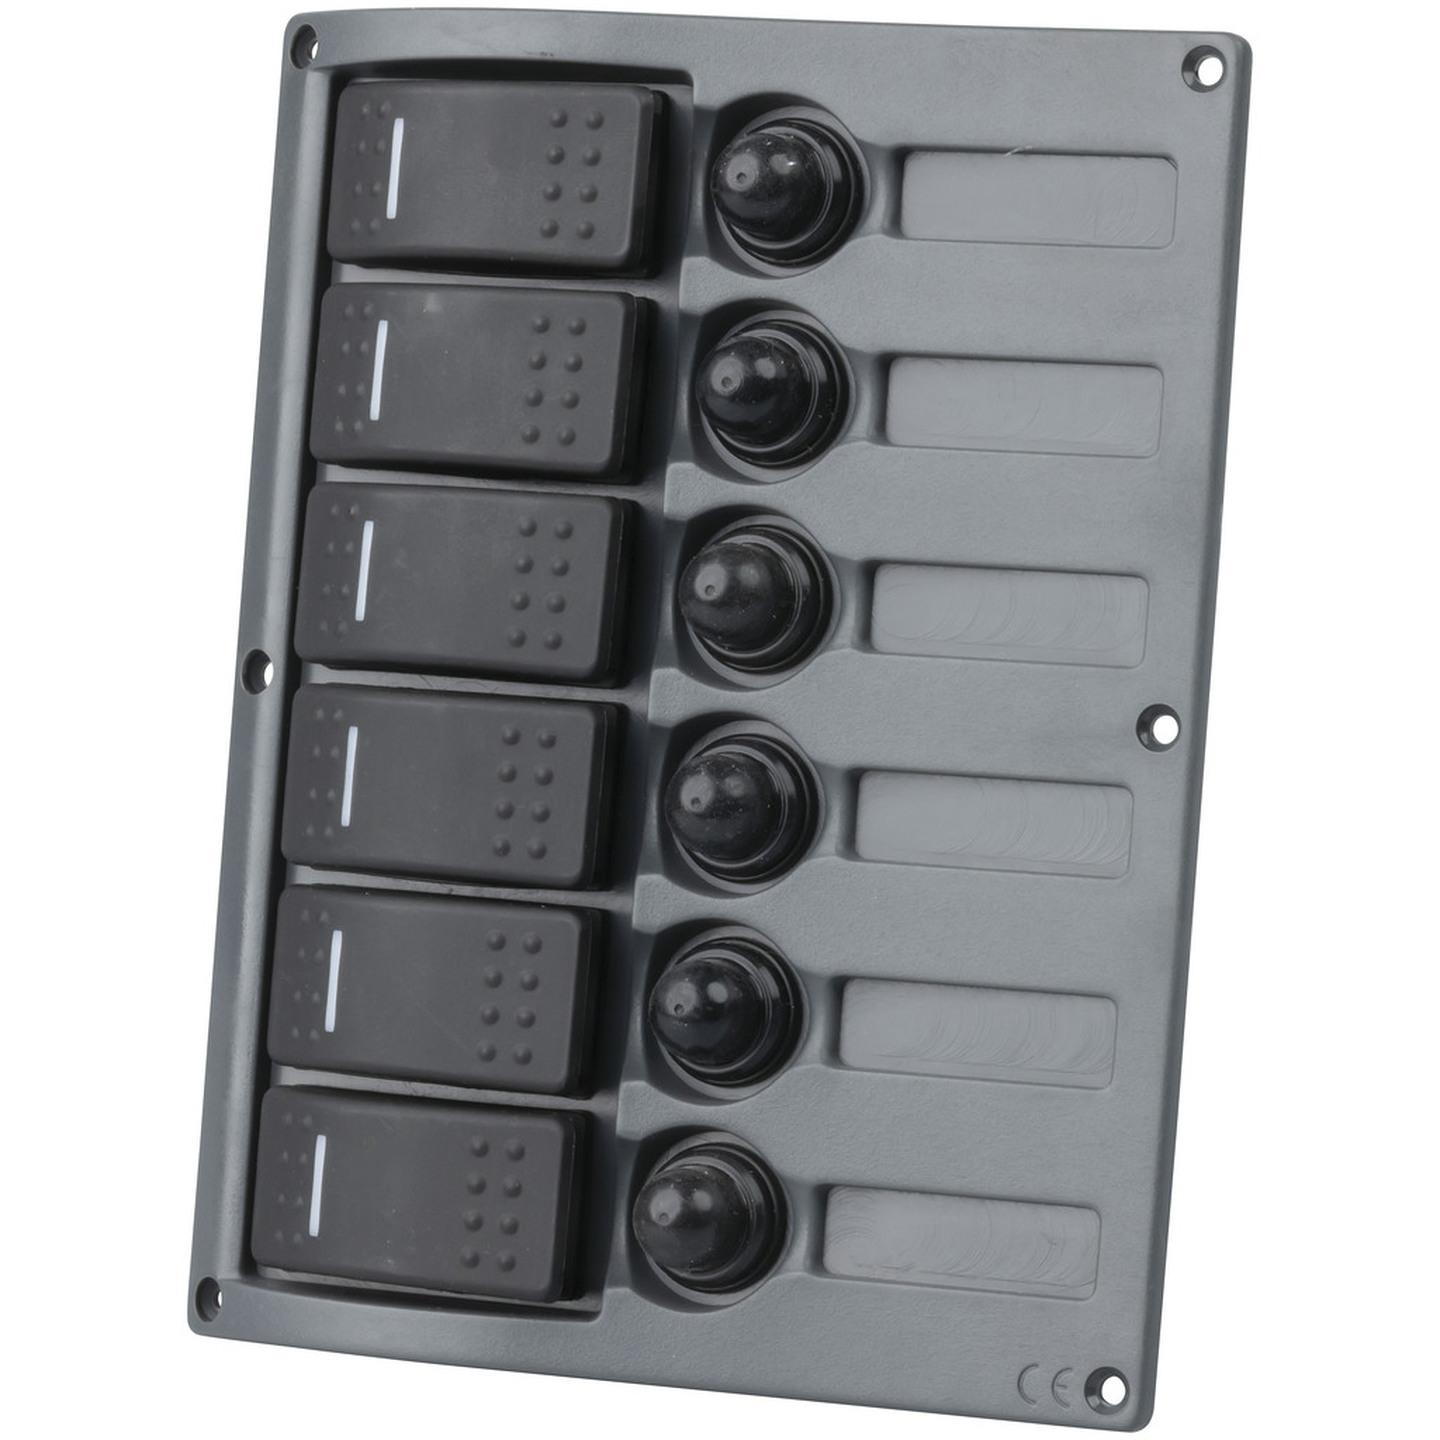 6 Way IP66 Marine Switch Panel